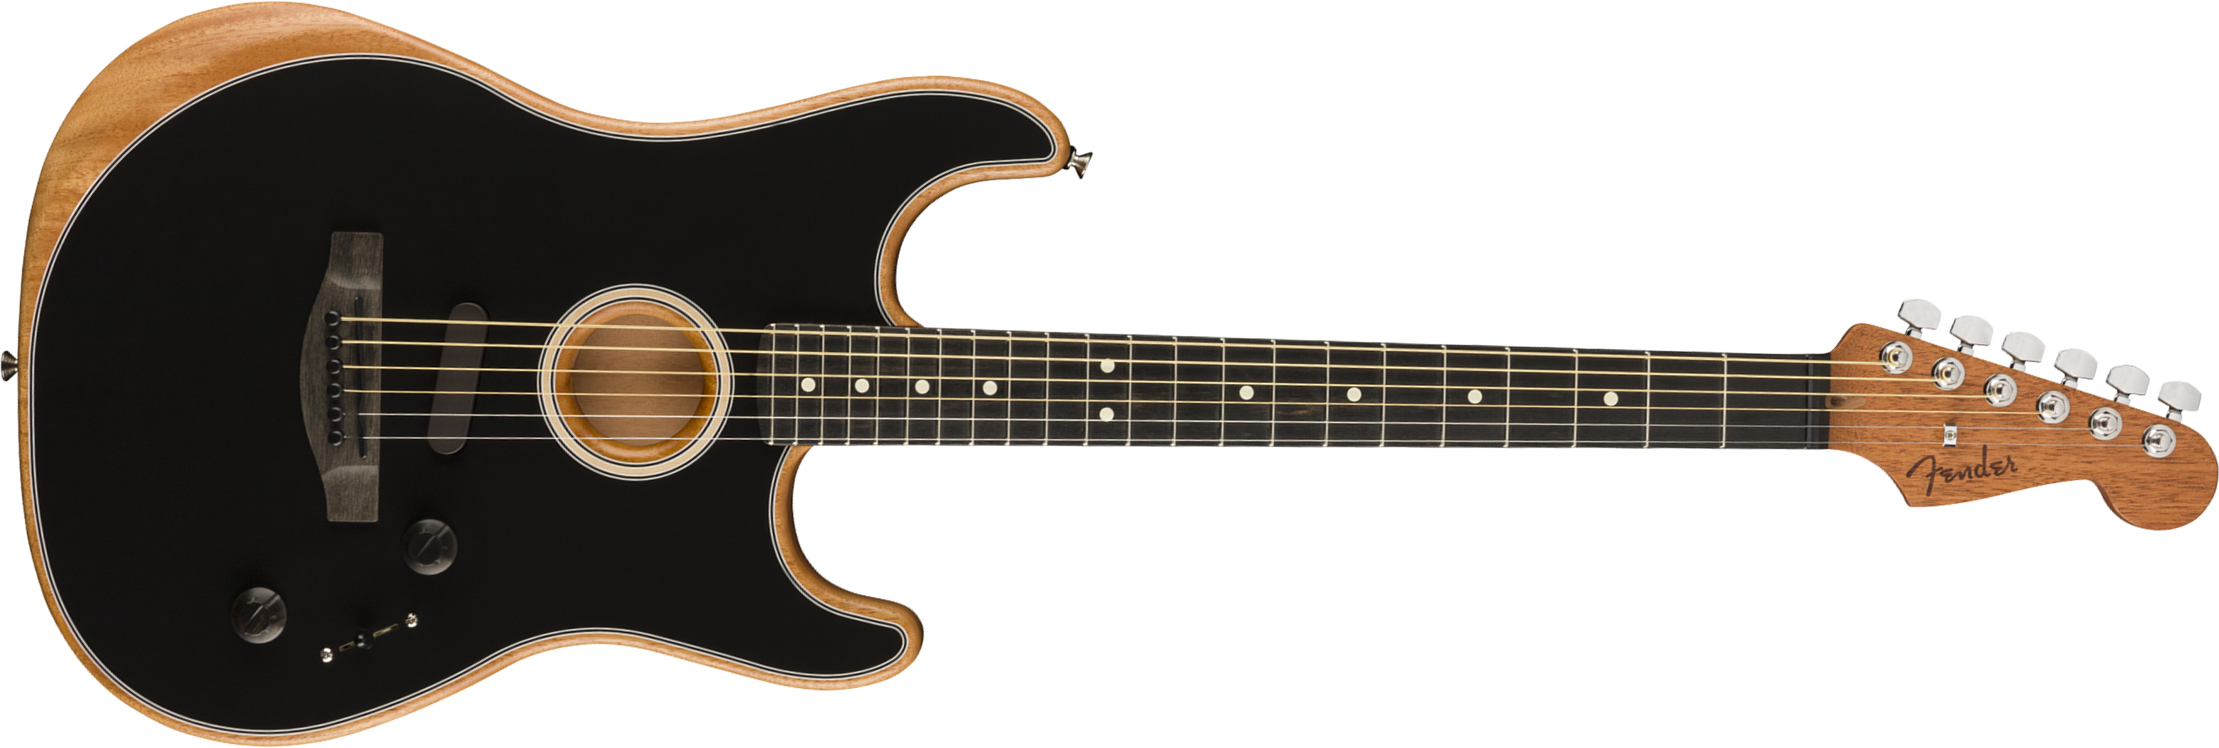 Fender Strat American Acoustasonic Usa Eb - Black - Elektroakustische Gitarre - Main picture